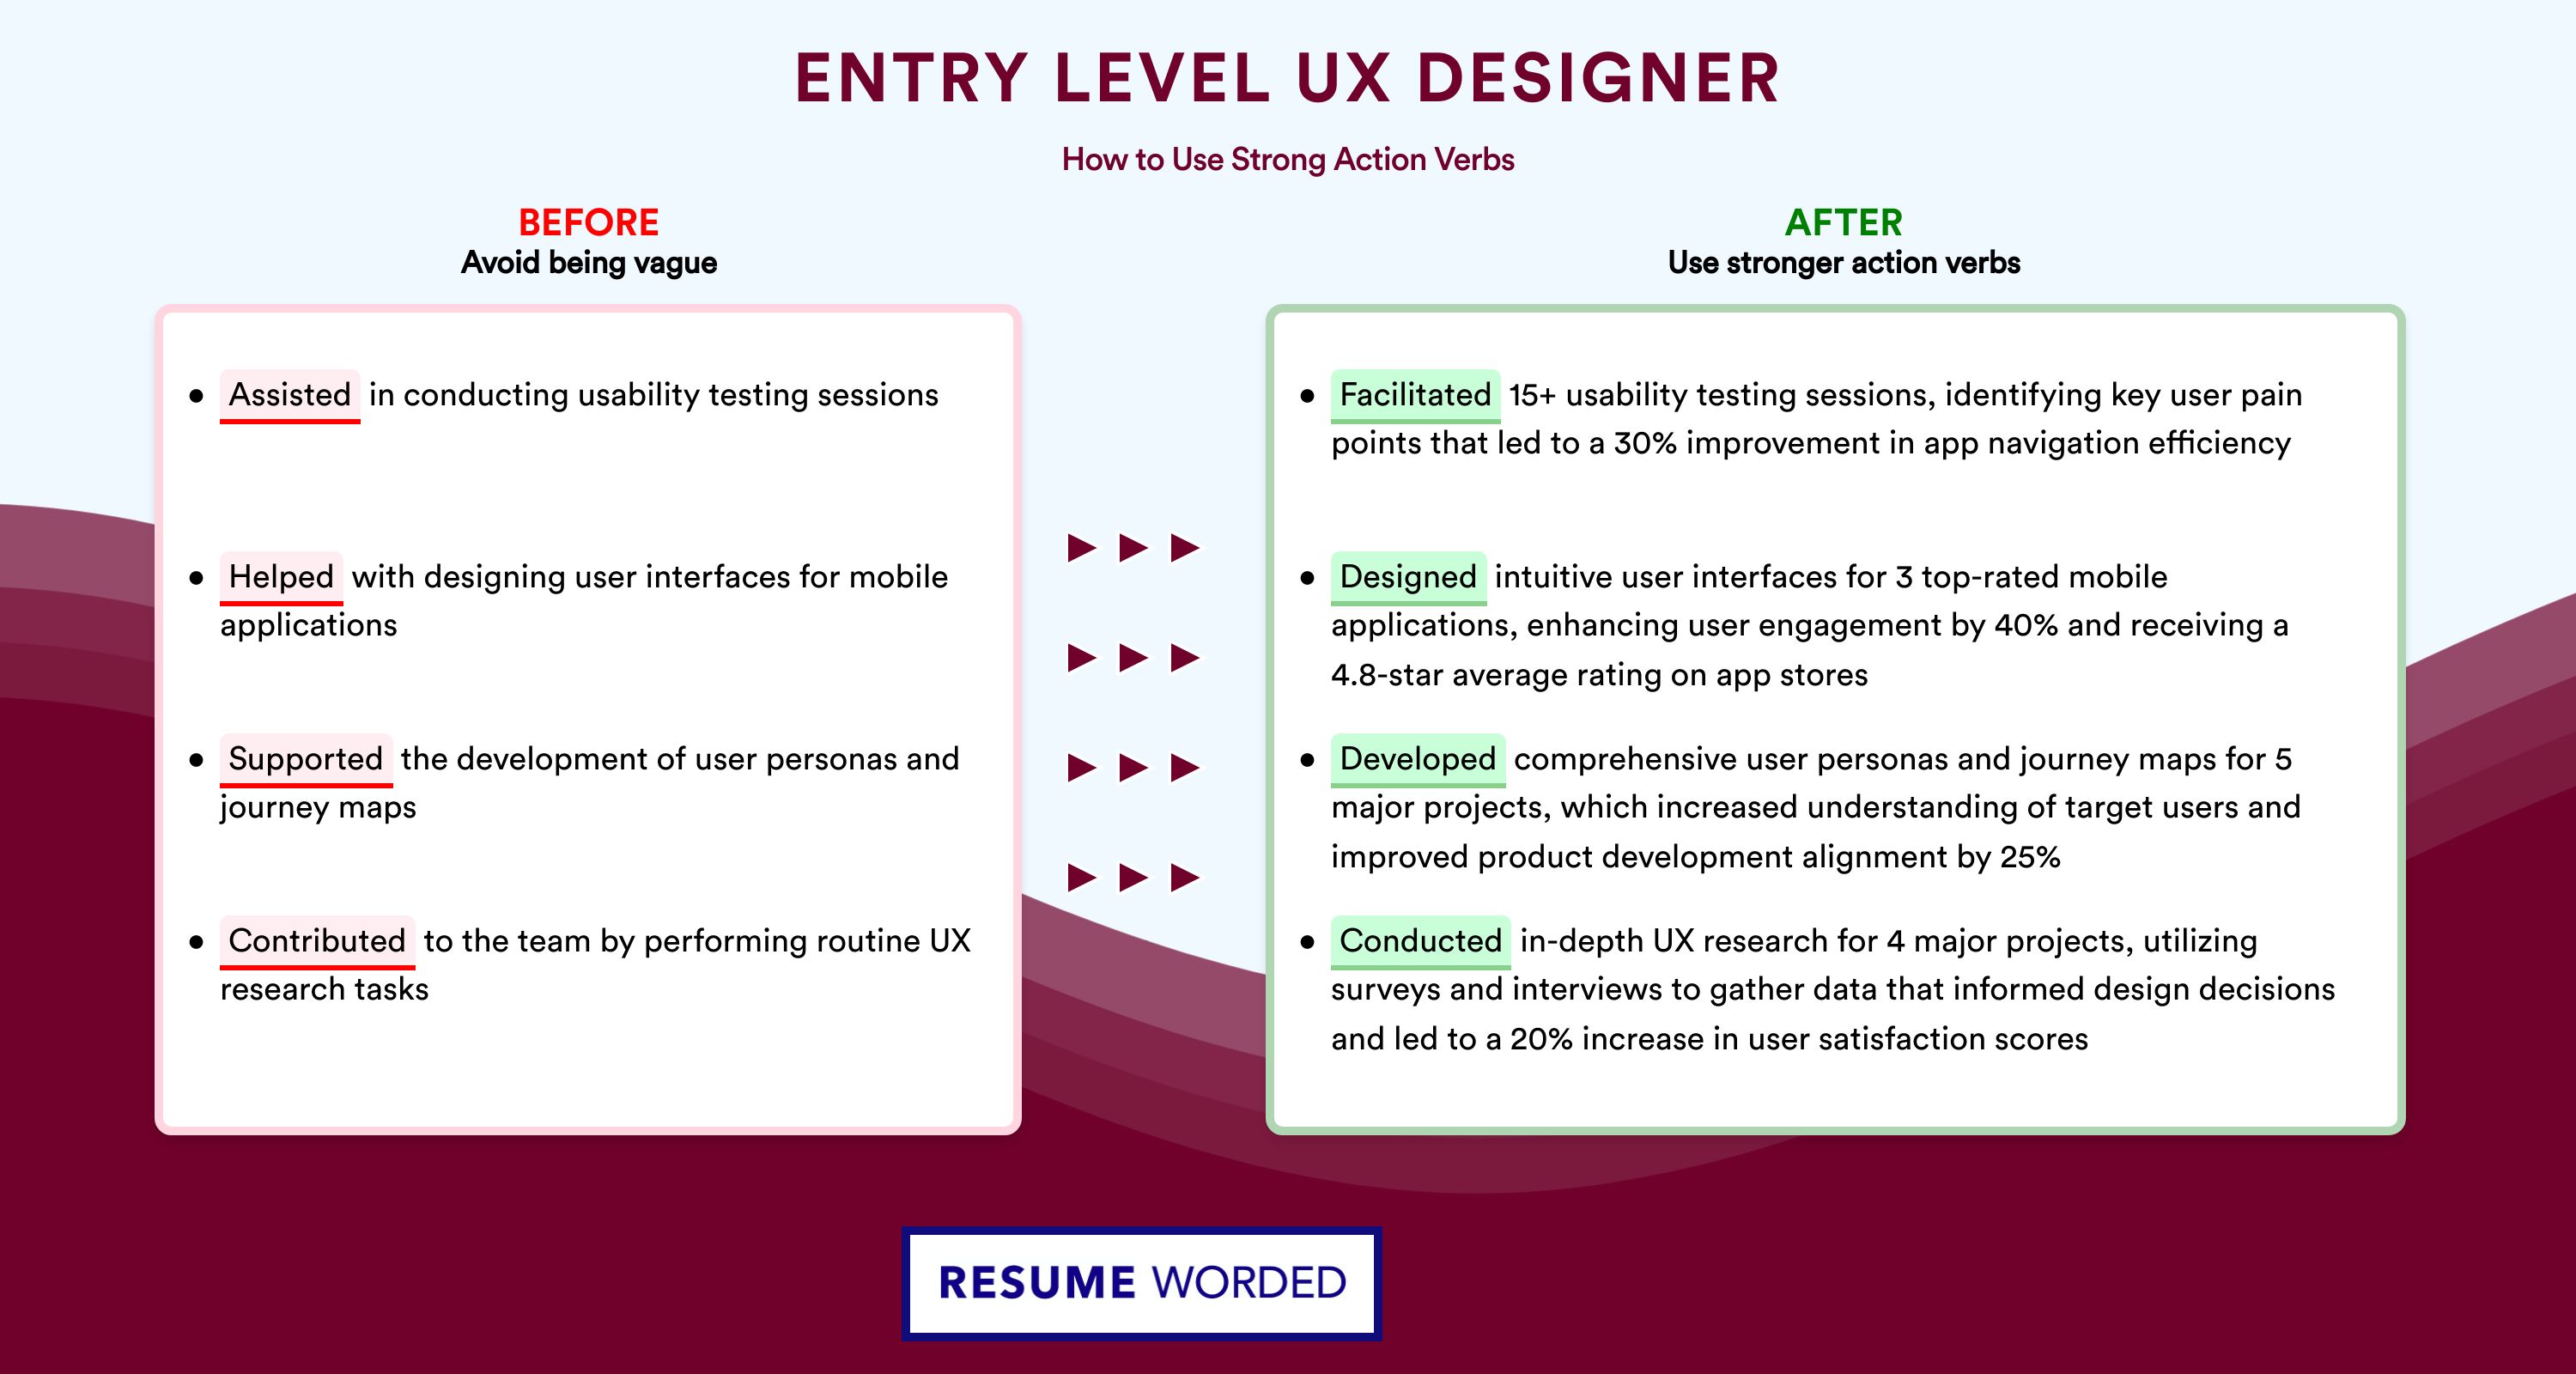 Action Verbs for Entry Level UX Designer